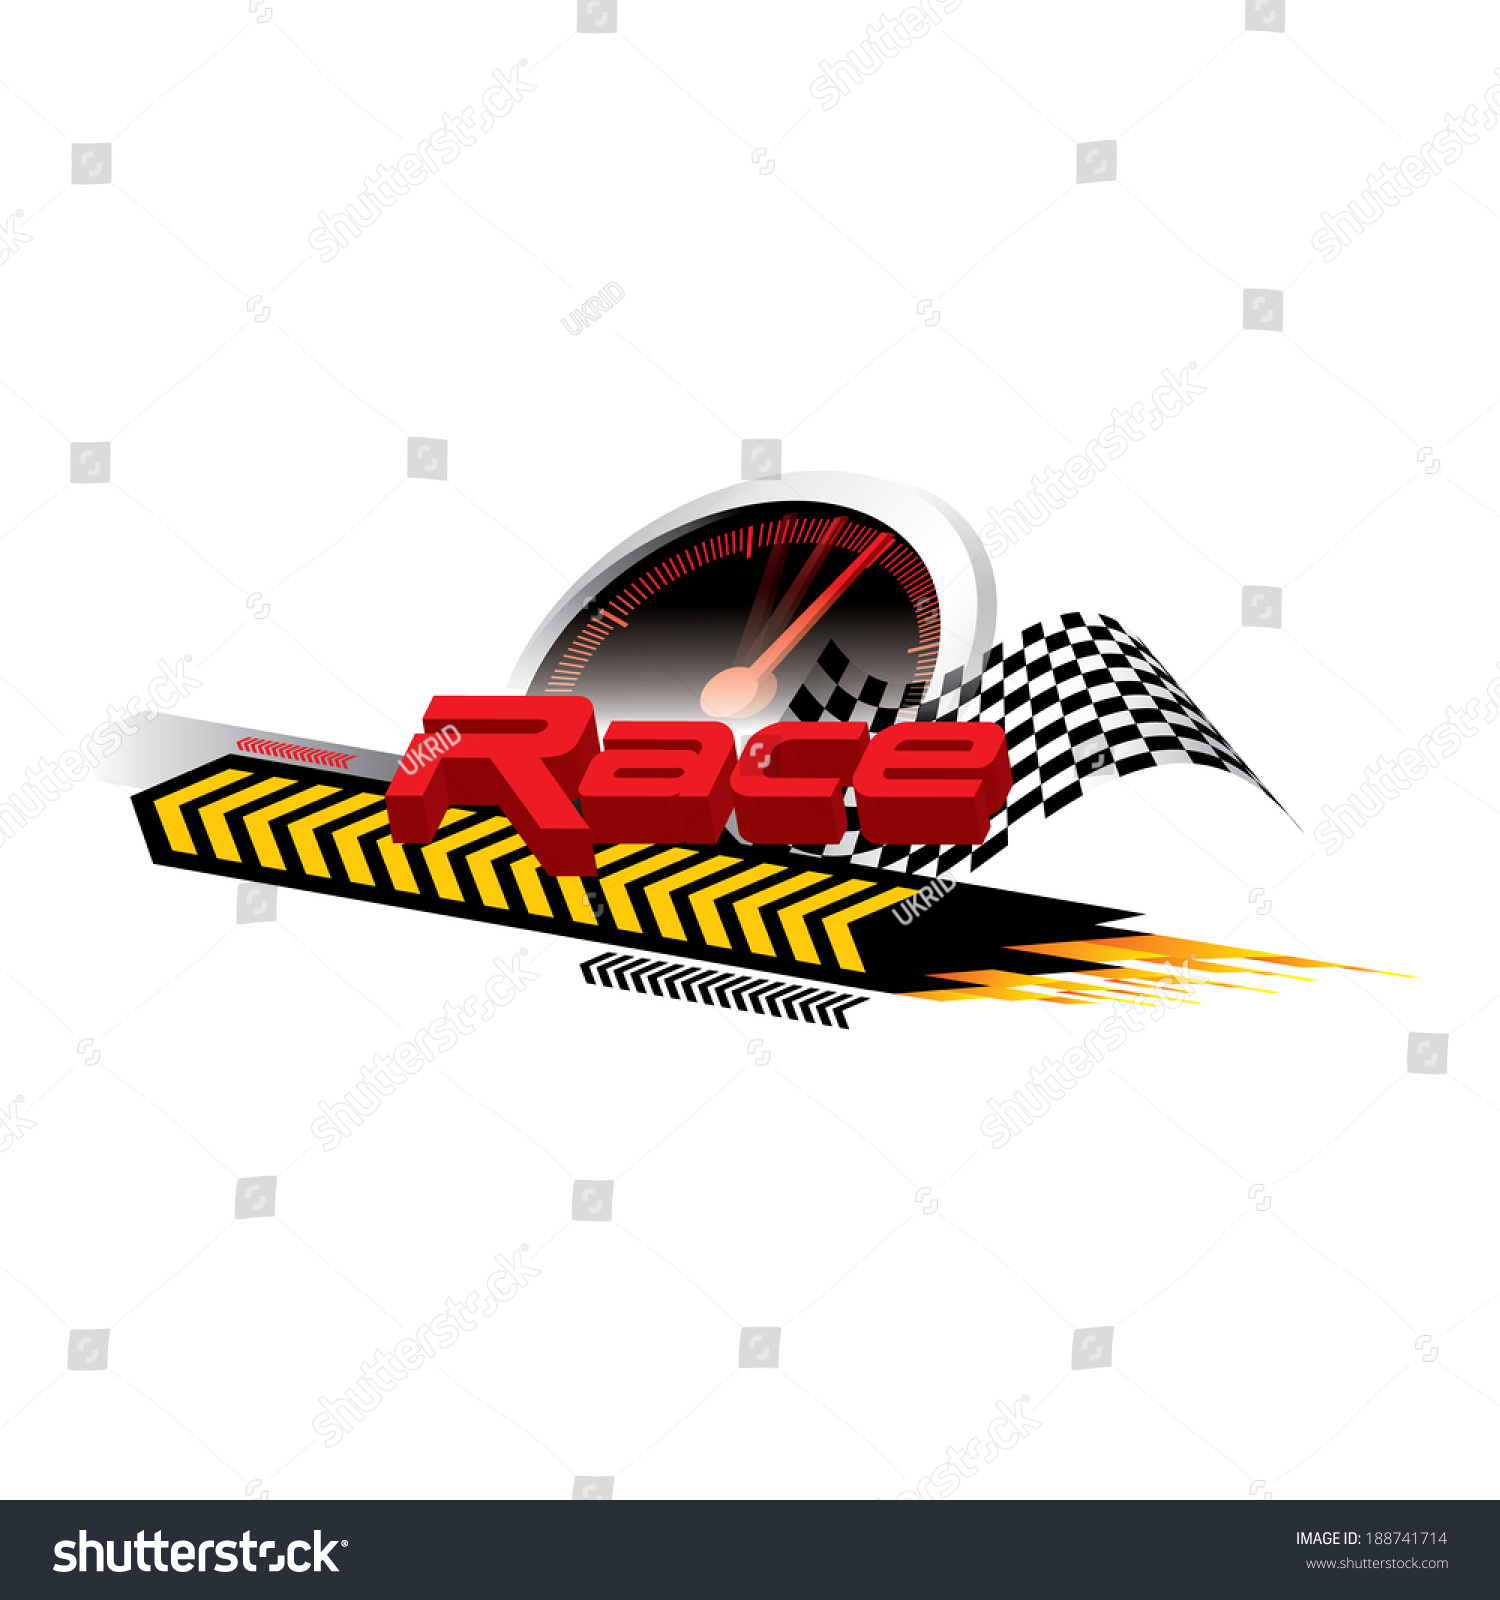 Race Concept Vector - 188741714 : Shutterstock